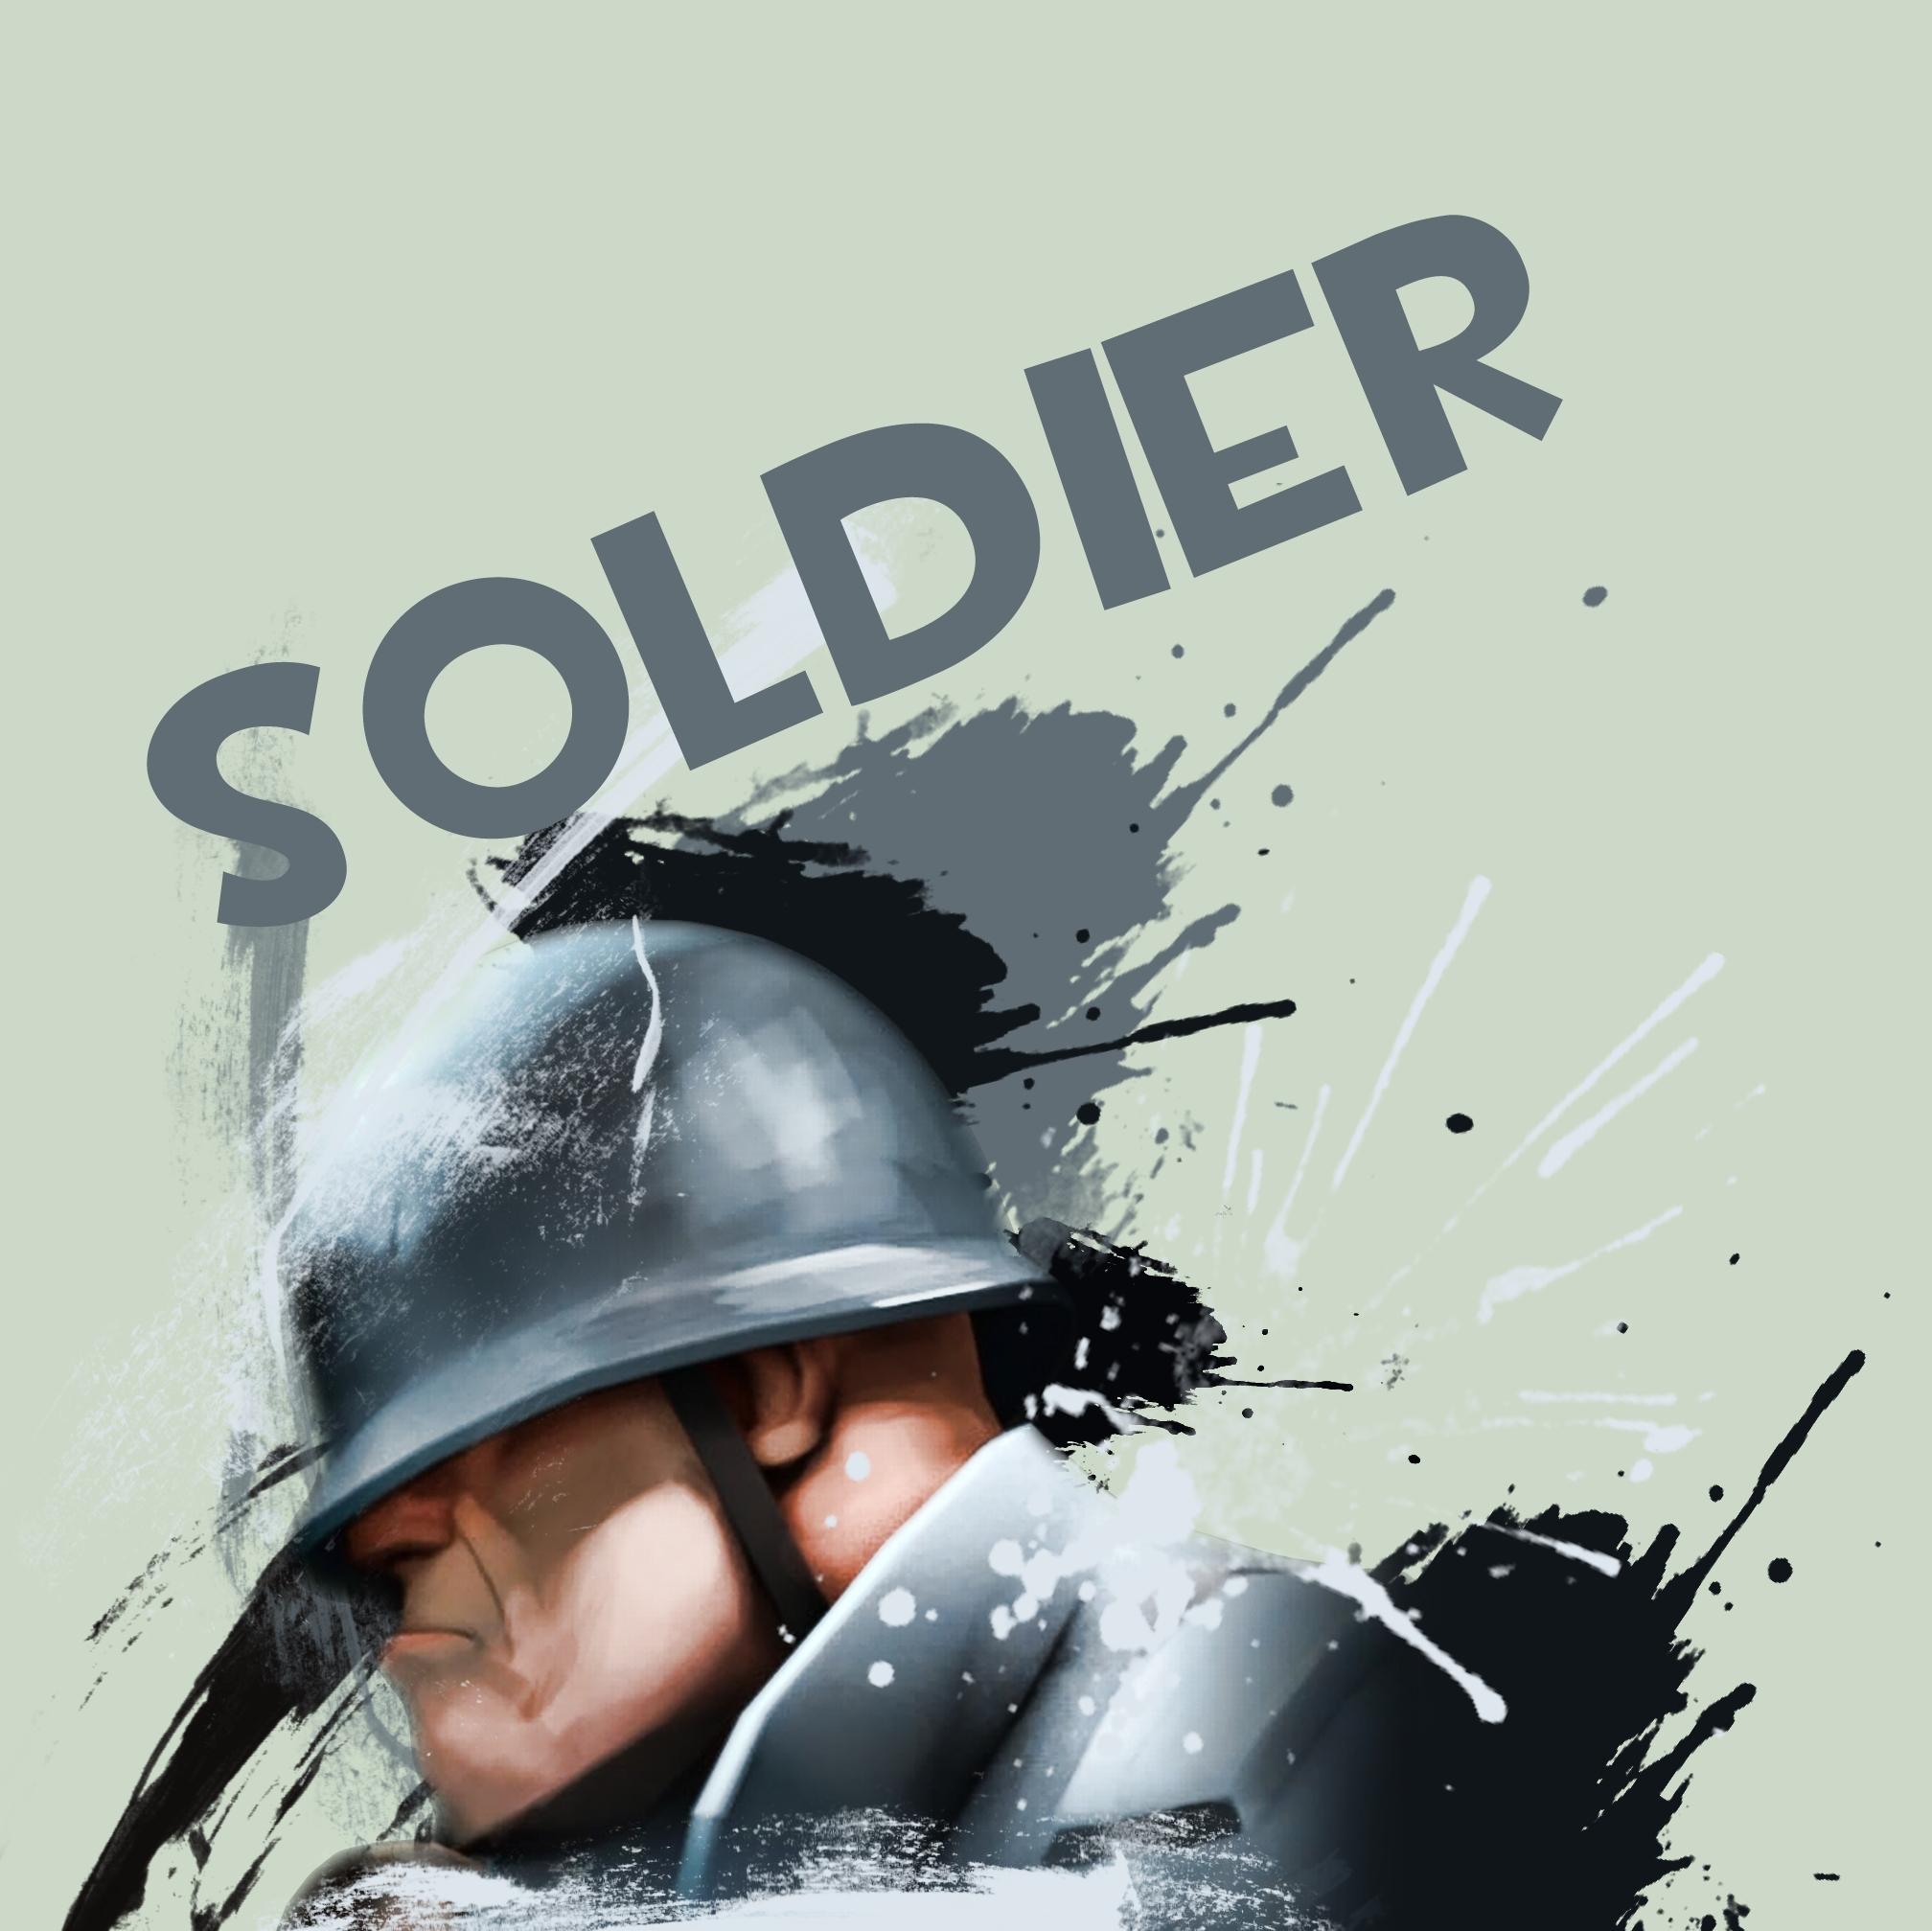 soldier wallpaper tf2